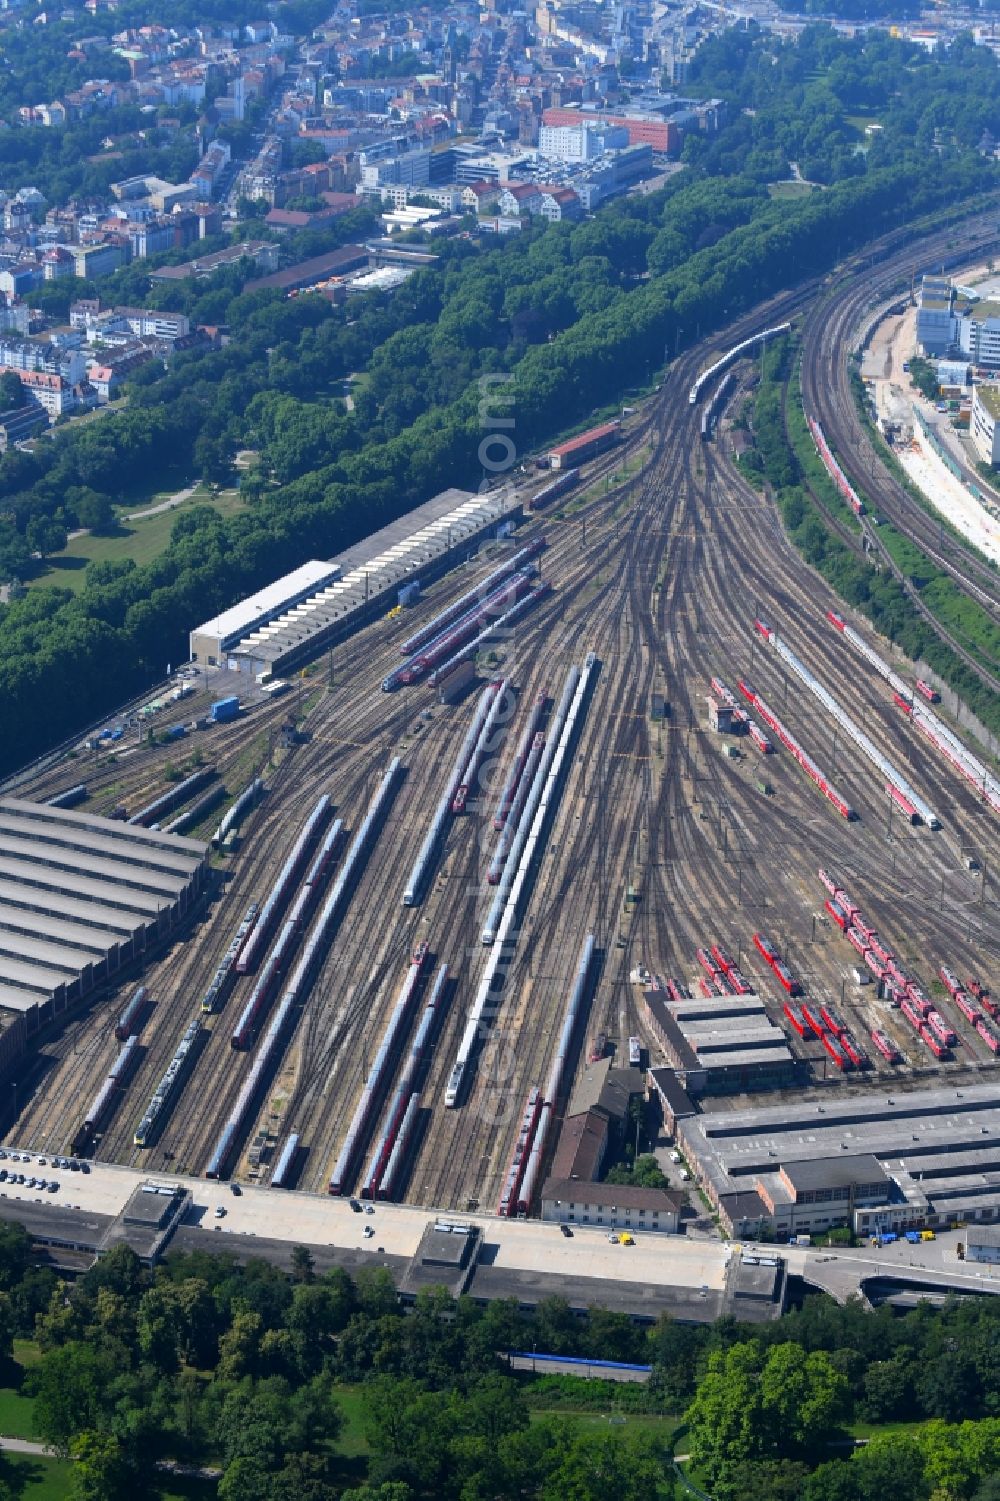 Aerial image Stuttgart - Tracks of Deutschen Bahn AG at the depot of the operating plant in Stuttgart in the state Baden-Wurttemberg, Germany